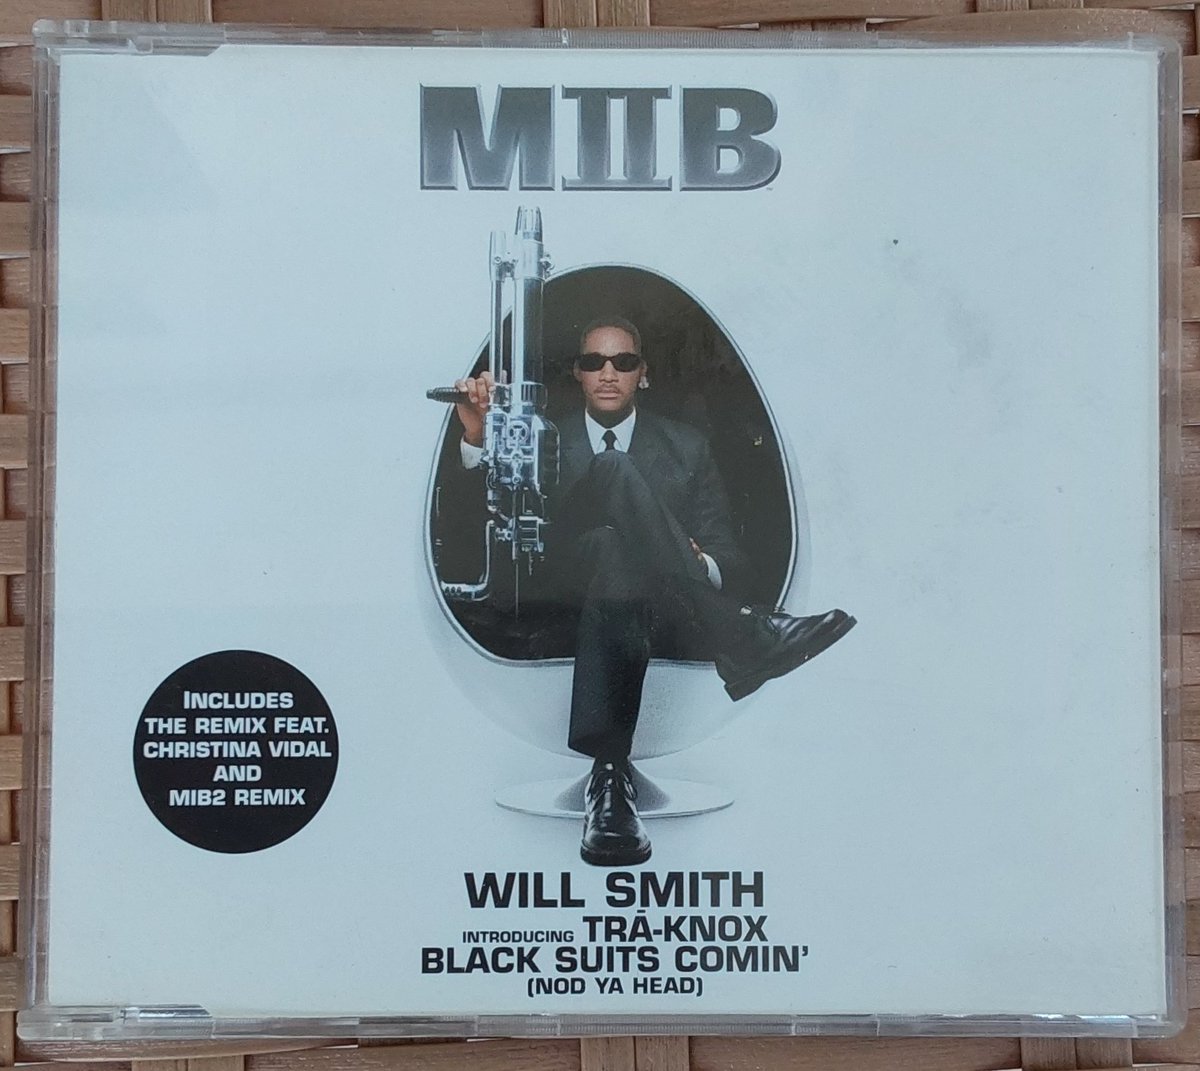 Will Smith - MIIB CD Single, UK Import, 100% original
Rp 50,000